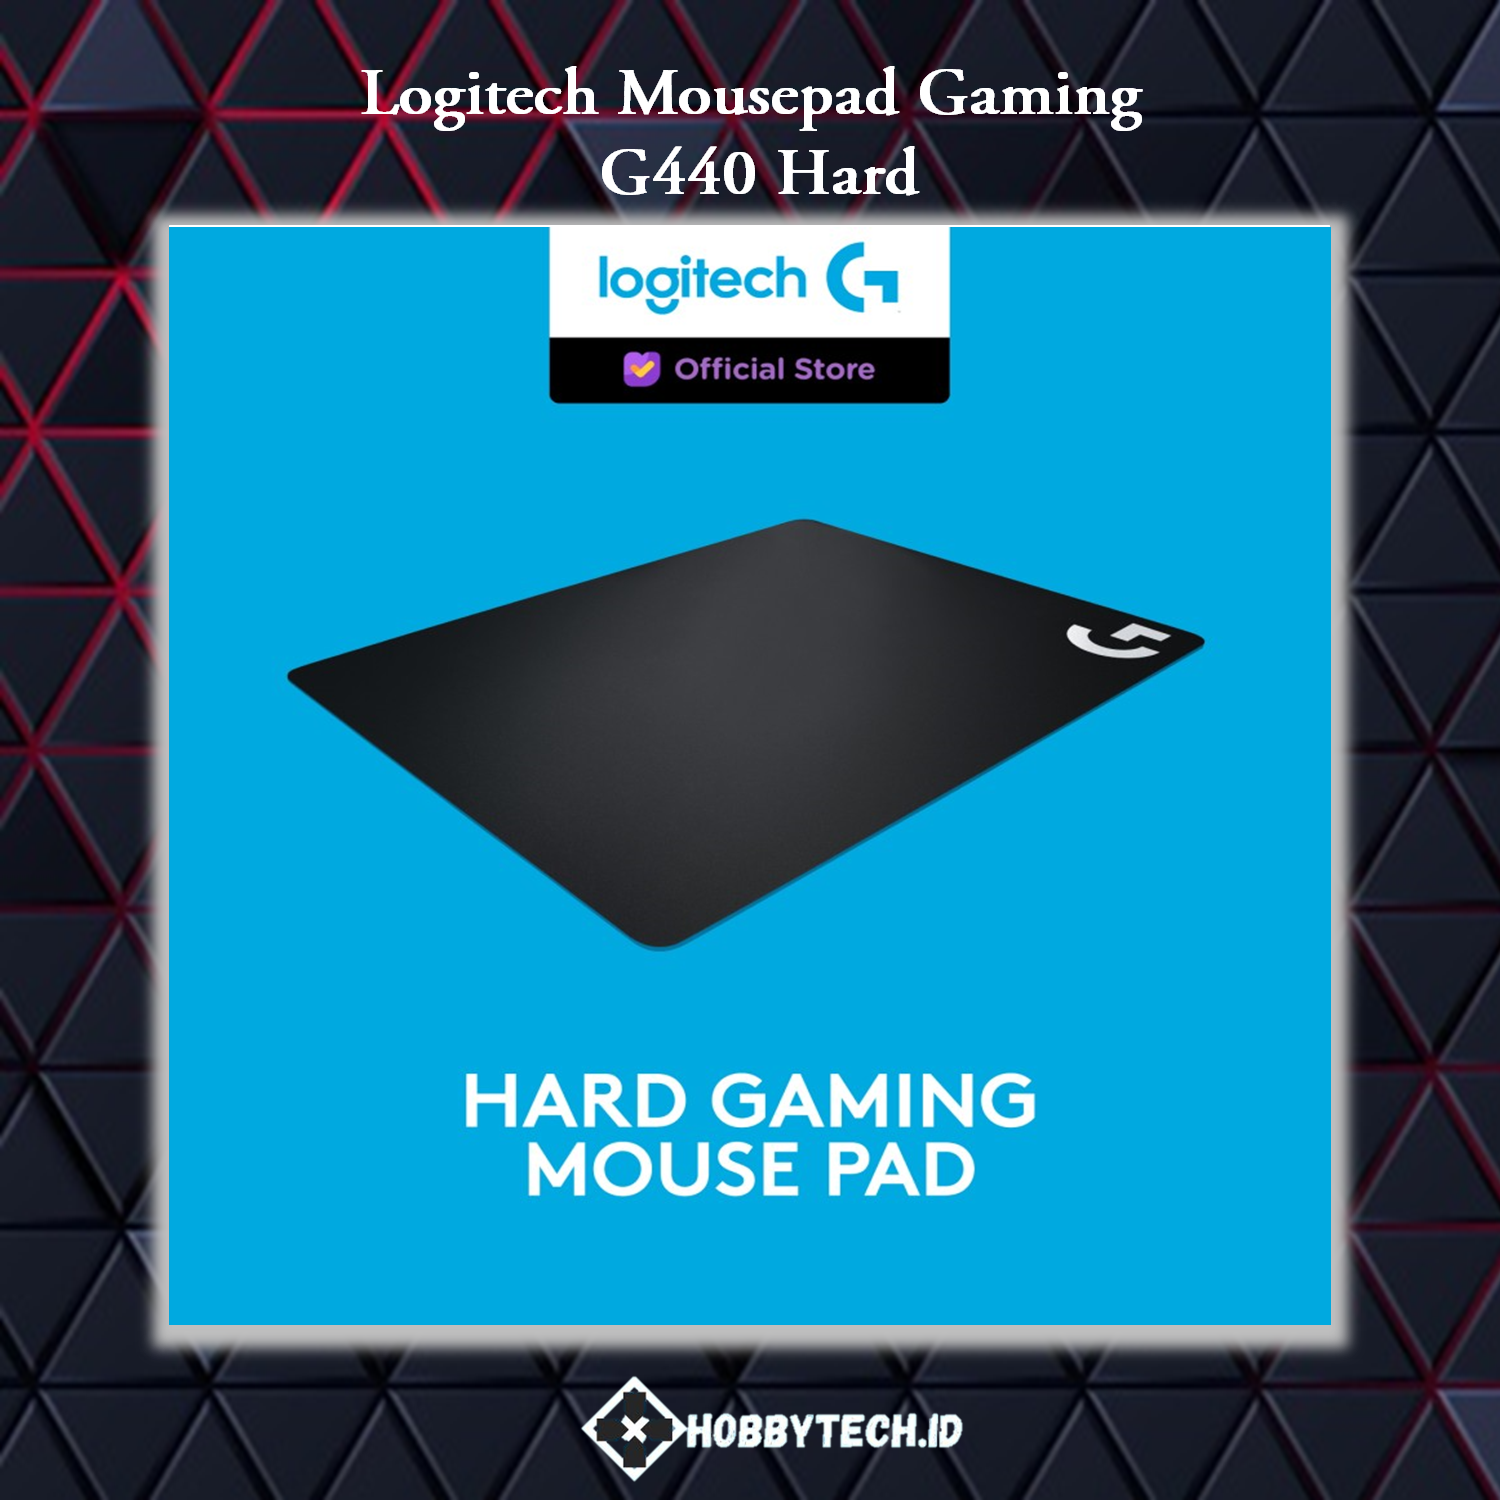 Logitech-G G440 Hard Gaming Mouse Pad